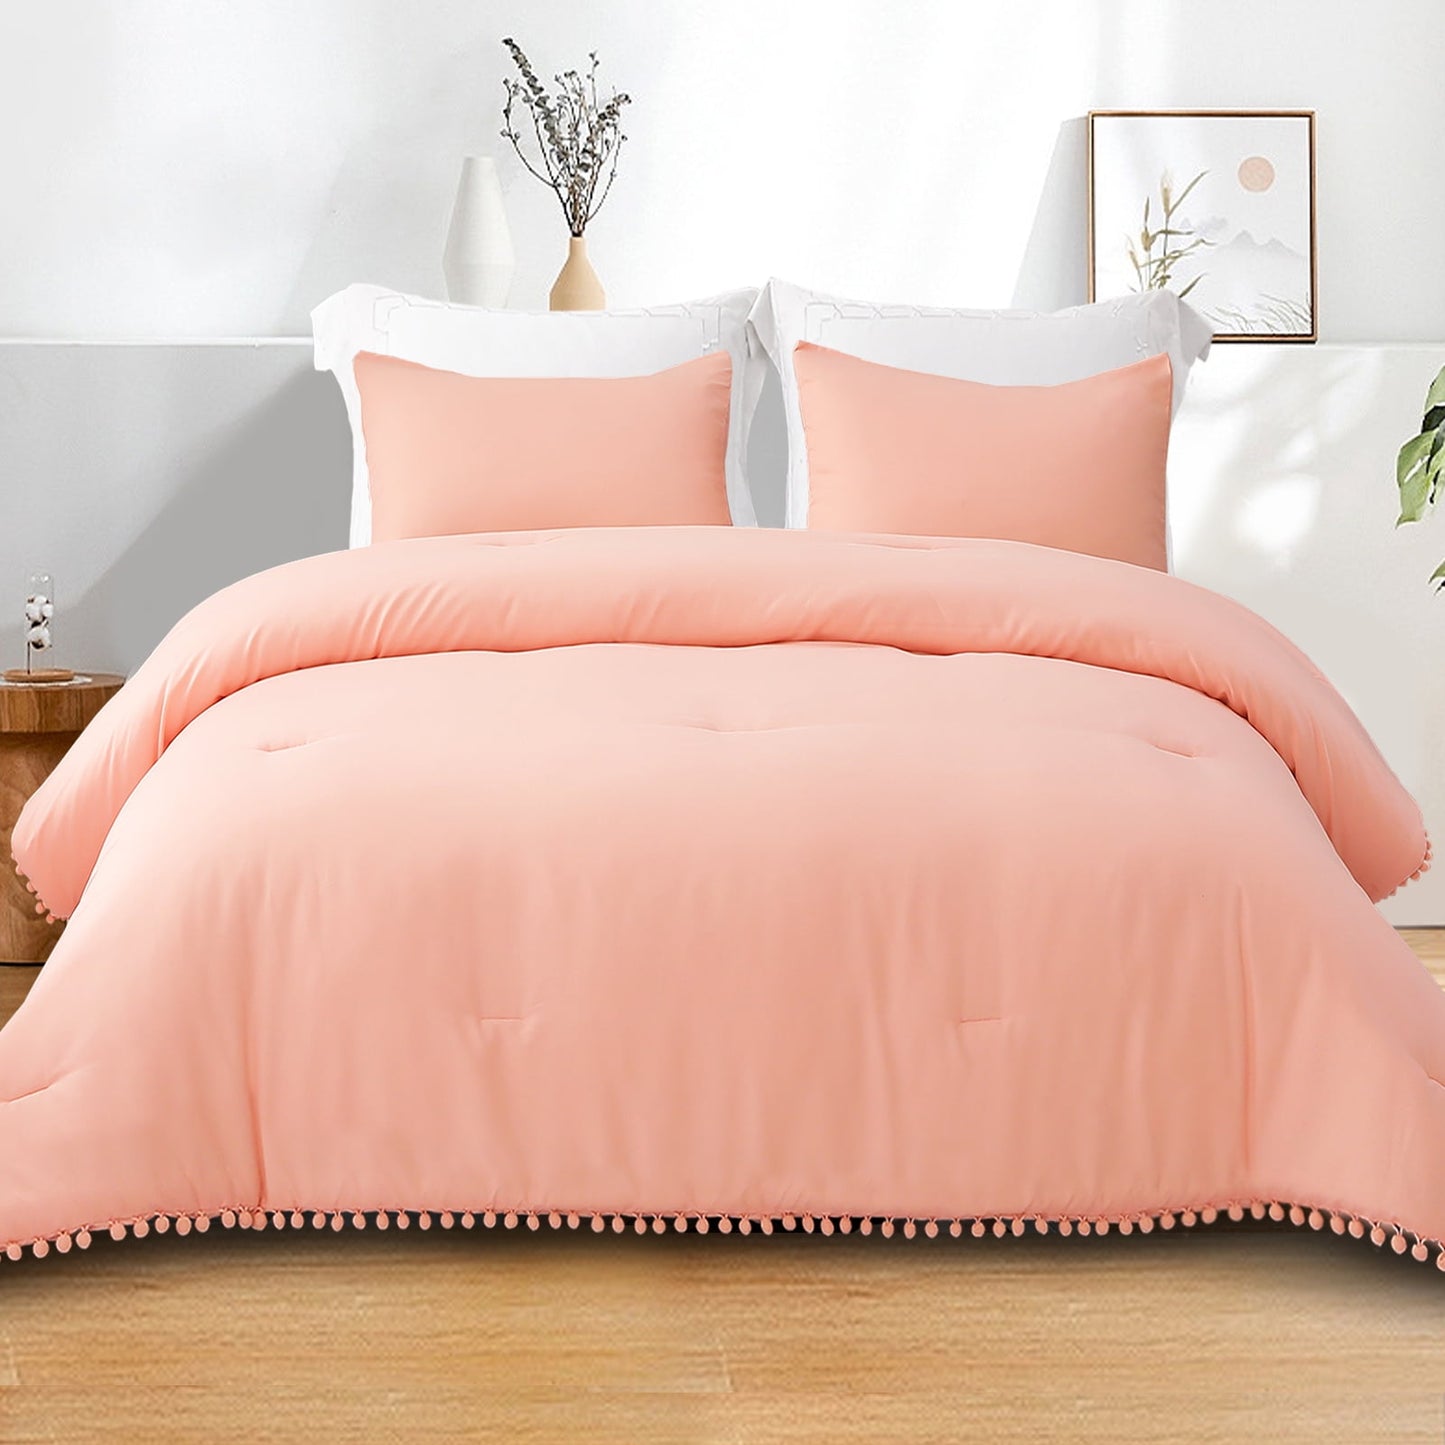 Exclusivo Mezcla Boho Pom Pom Ball Fringe King Size Comforter Set, 3 Piece Bright Pink Lightweight Down Alternative Bedding Comforter Sets for All Seasons (1 Comforter and 2 Pillowcases)